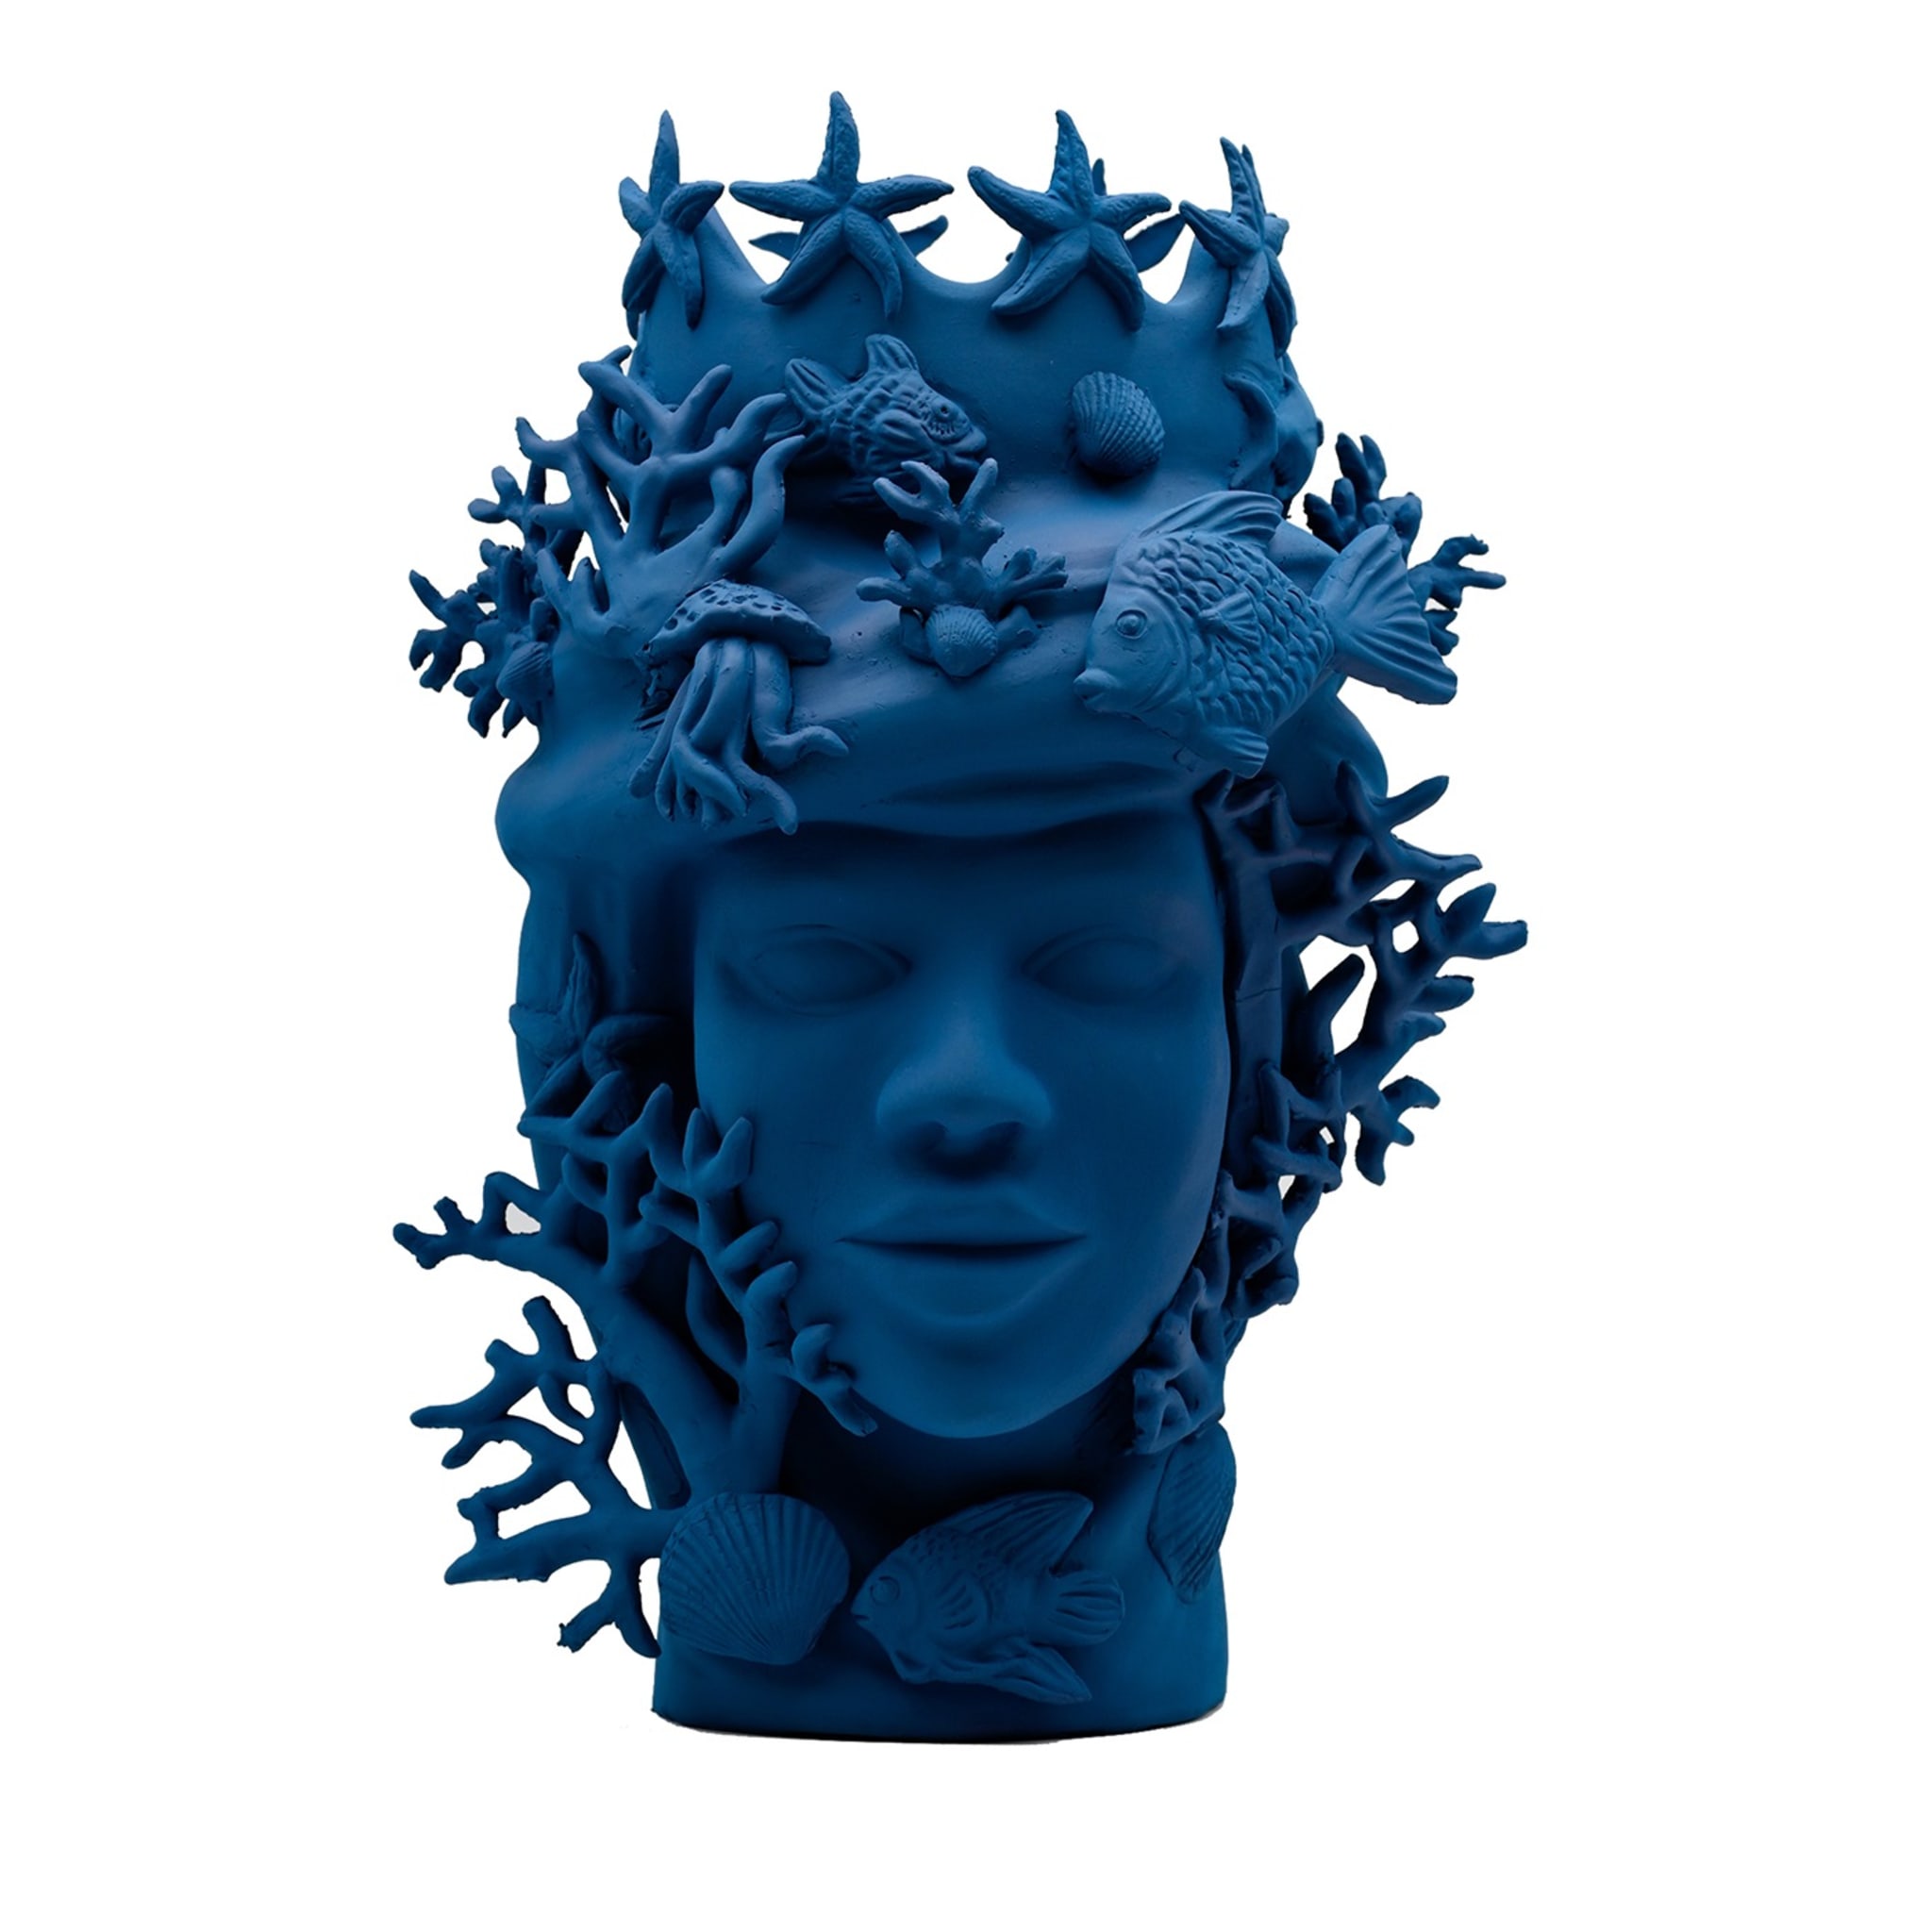 Royal Blue Handcrafted Moor's Head Sculpture